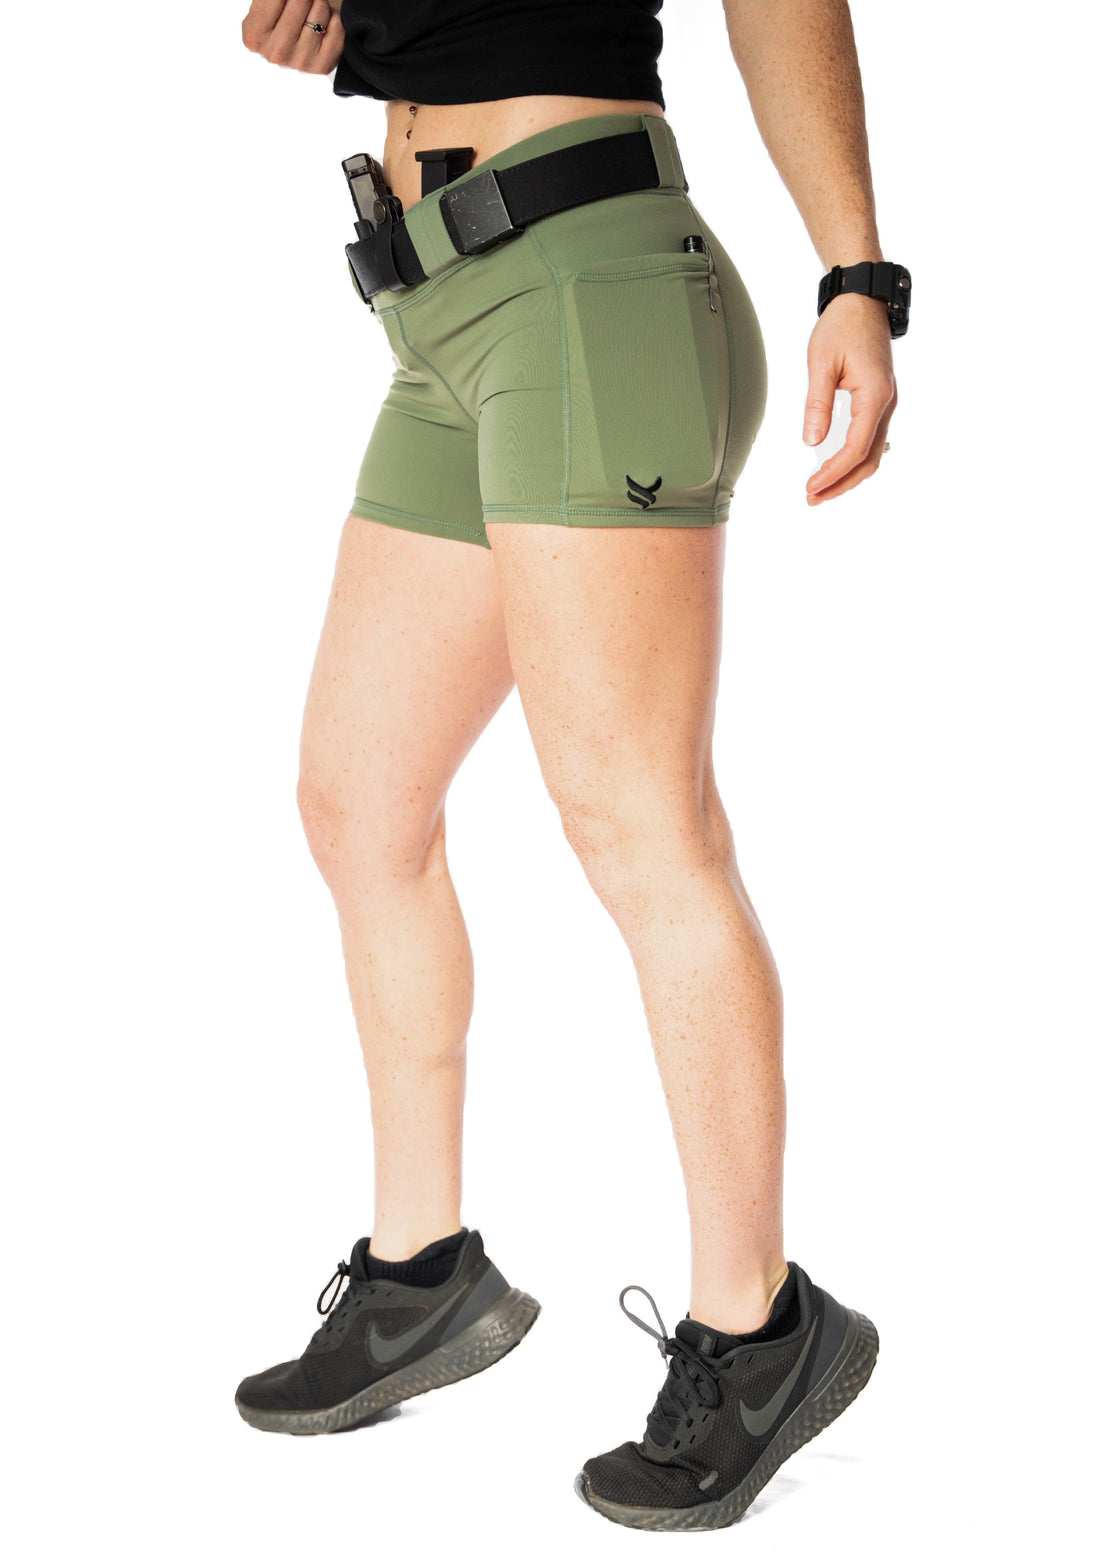 Original Design Low Rise Women's Compression Carry Shorts - Olive